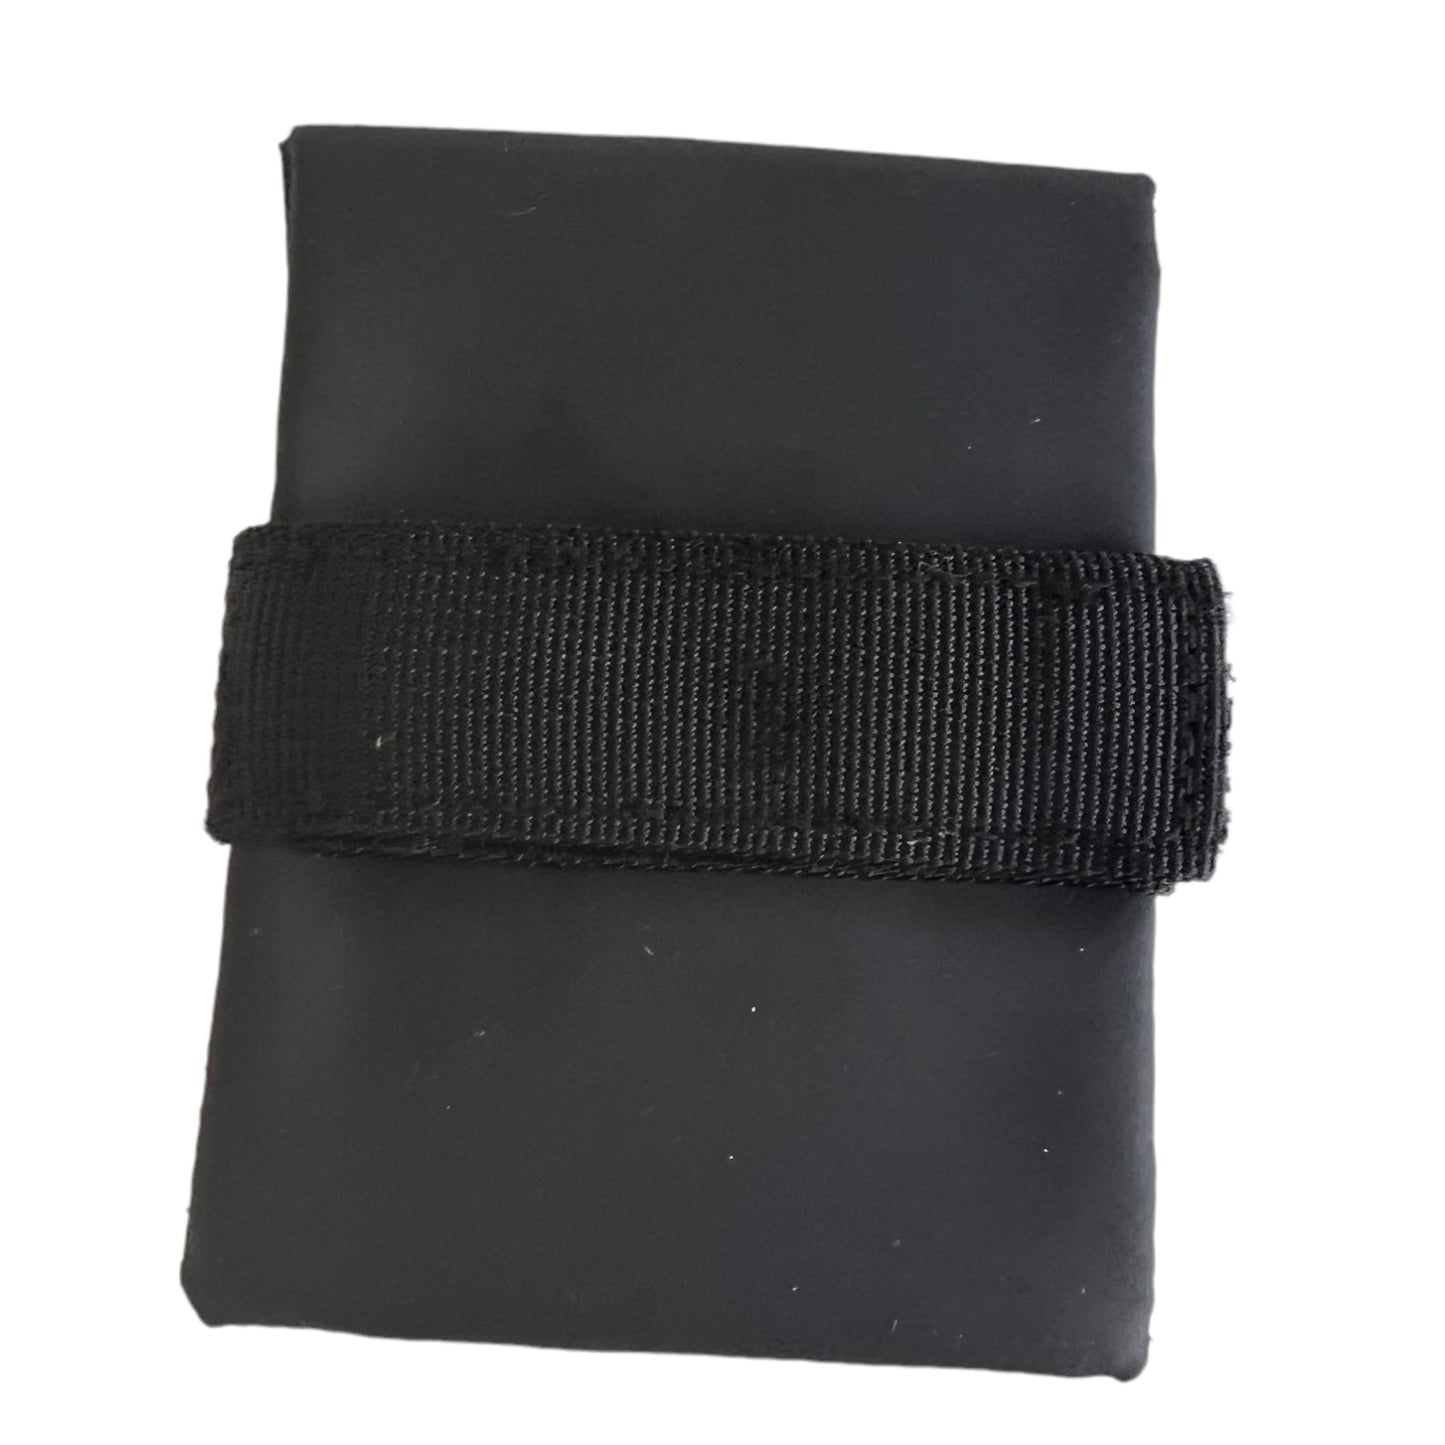 Mini Velcro Close Bag for Essentials.. tools, meds, cards, keys, etc Mobility & Accessibility SPIRIT SPARKPLUGS   